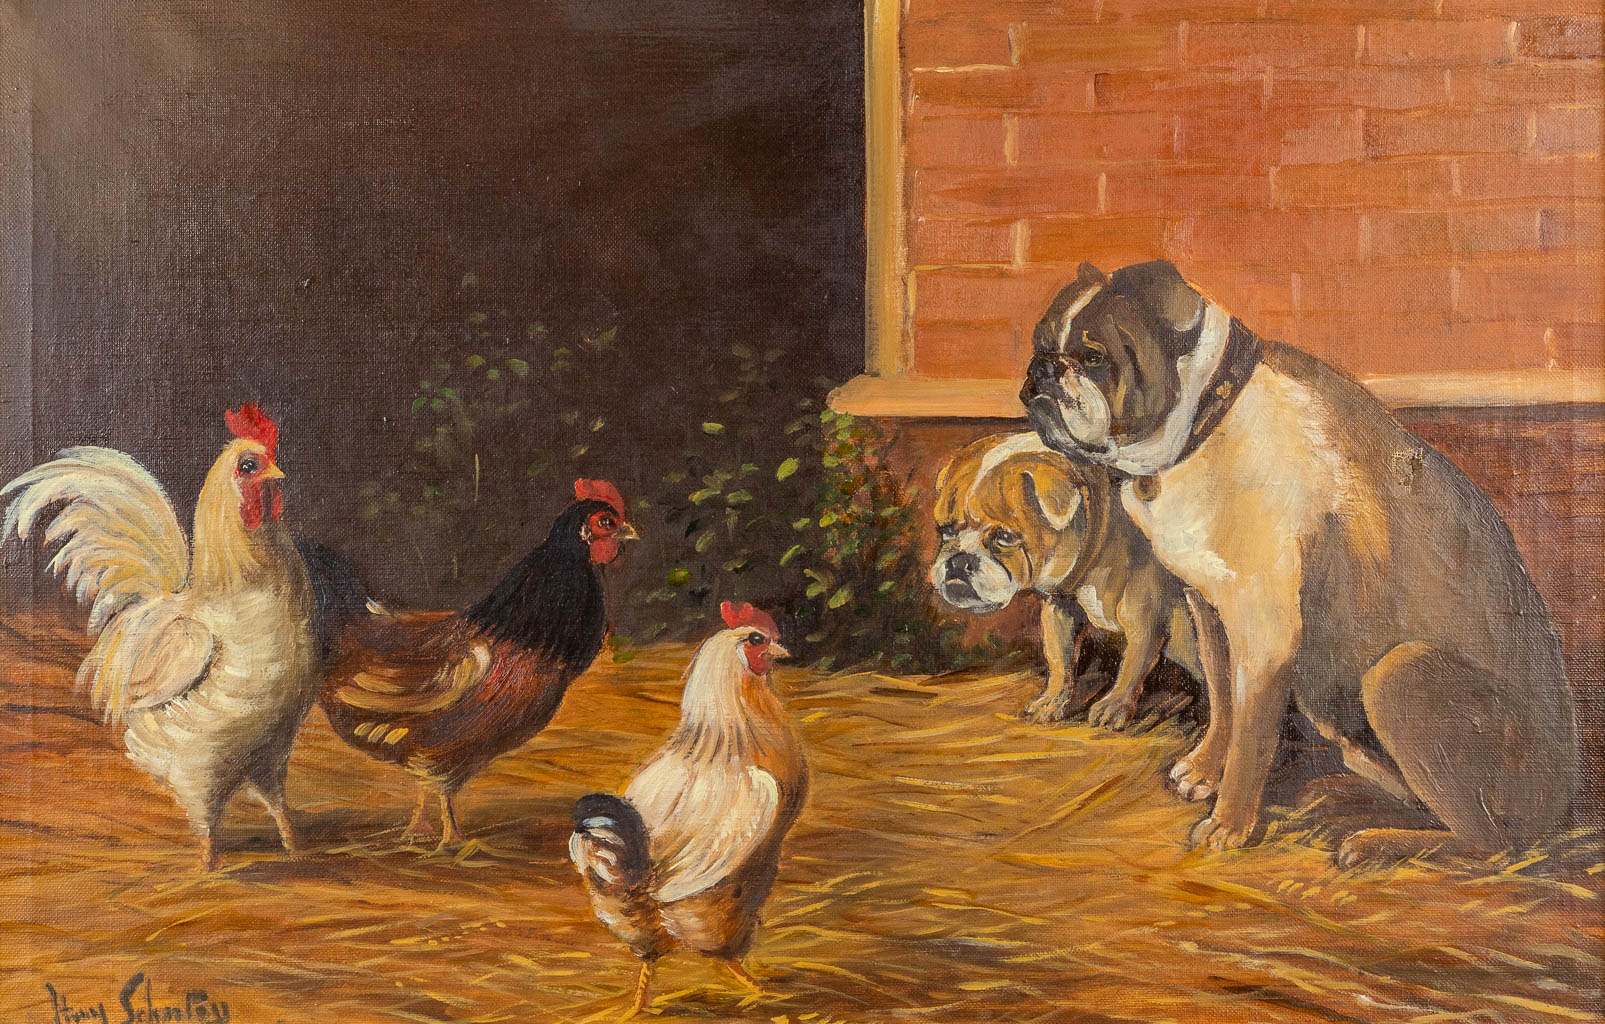  Paul SCHOUTEN (1860-1922) 'Chicken' a painting, oil on canvas. 